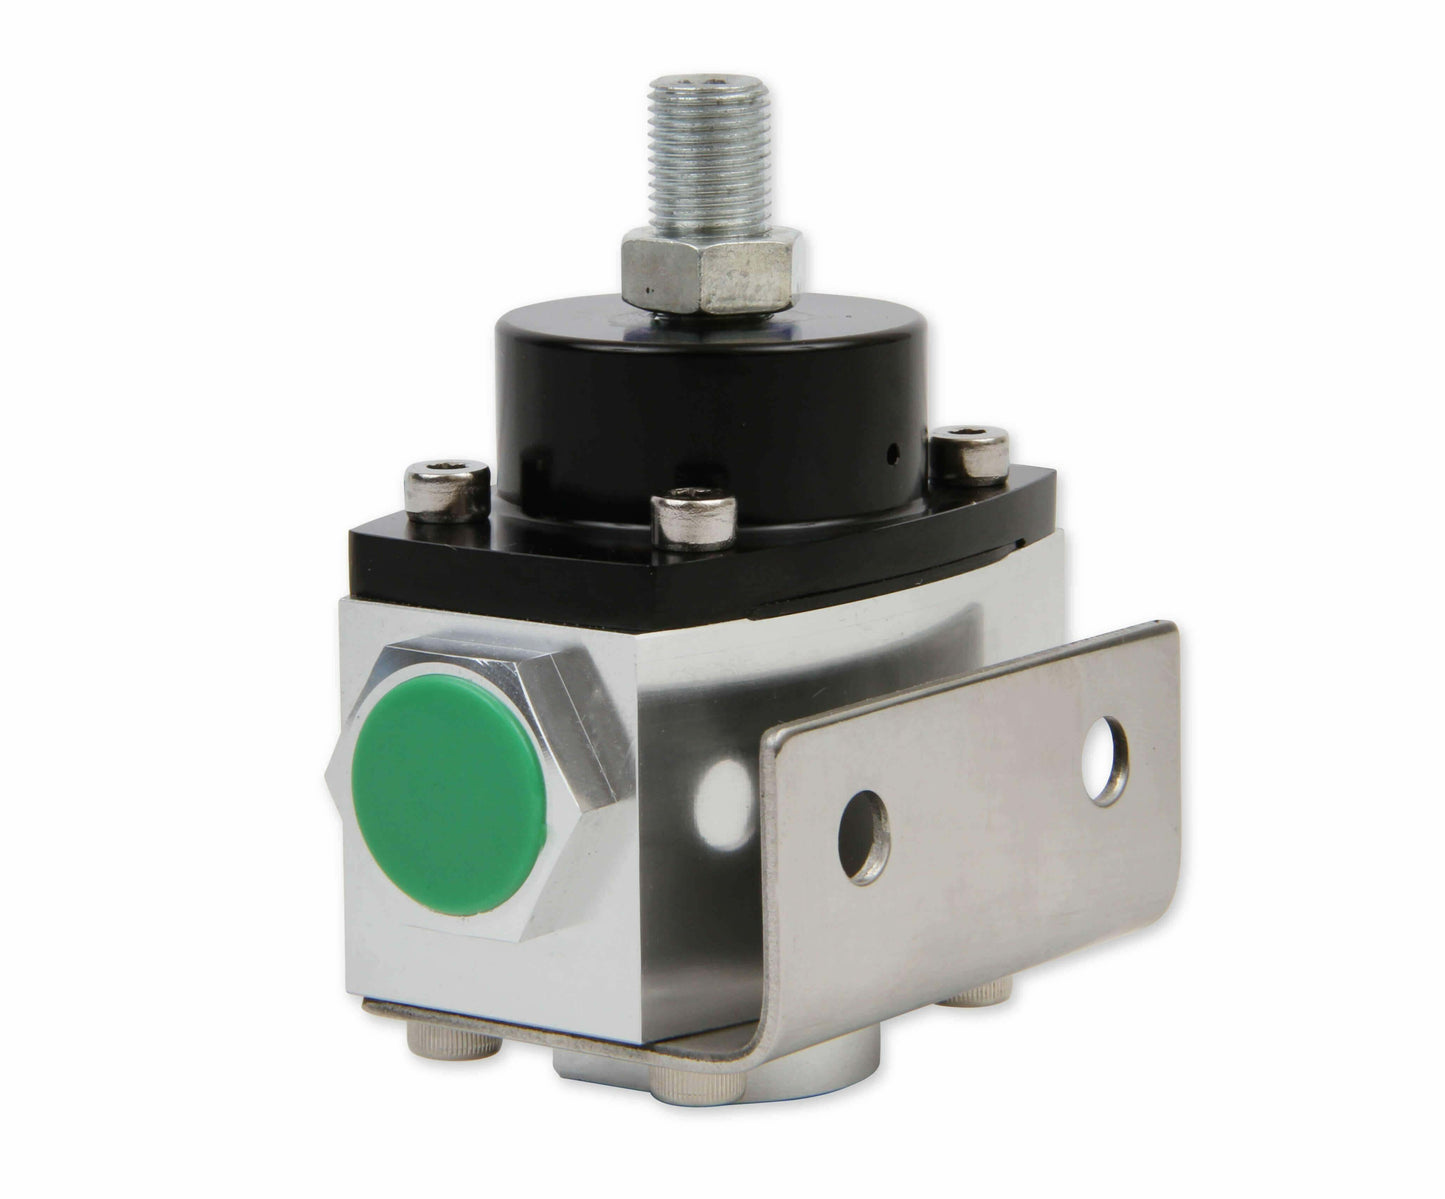 Mr Gasket 2015 Fuel Pressure Regulator Fuel Pressure Range is 4.5 – 9 PSI